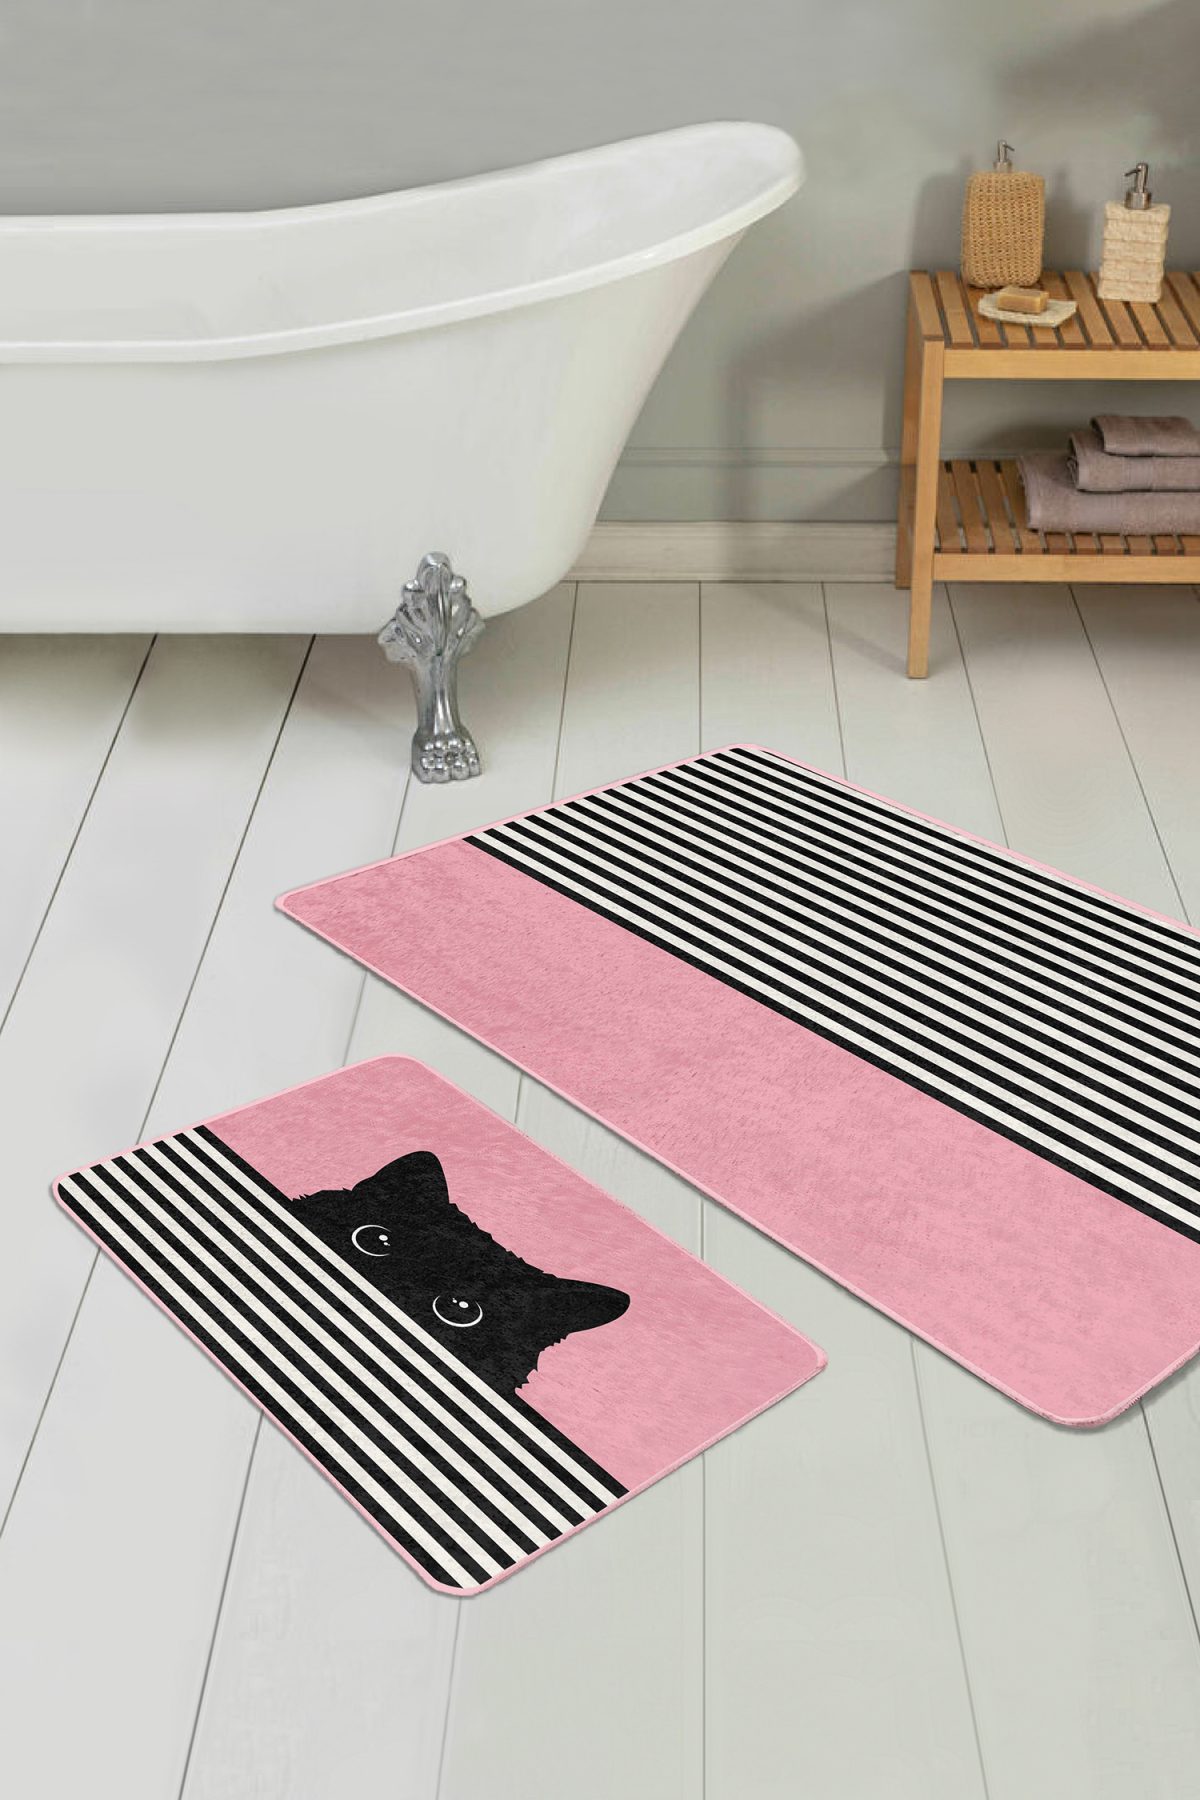 Pembe Zemin Çizgili Kedi Özel Tasarım 2'li Banyo Paspas Takımı & Mutfak Paspas Seti Realhomes